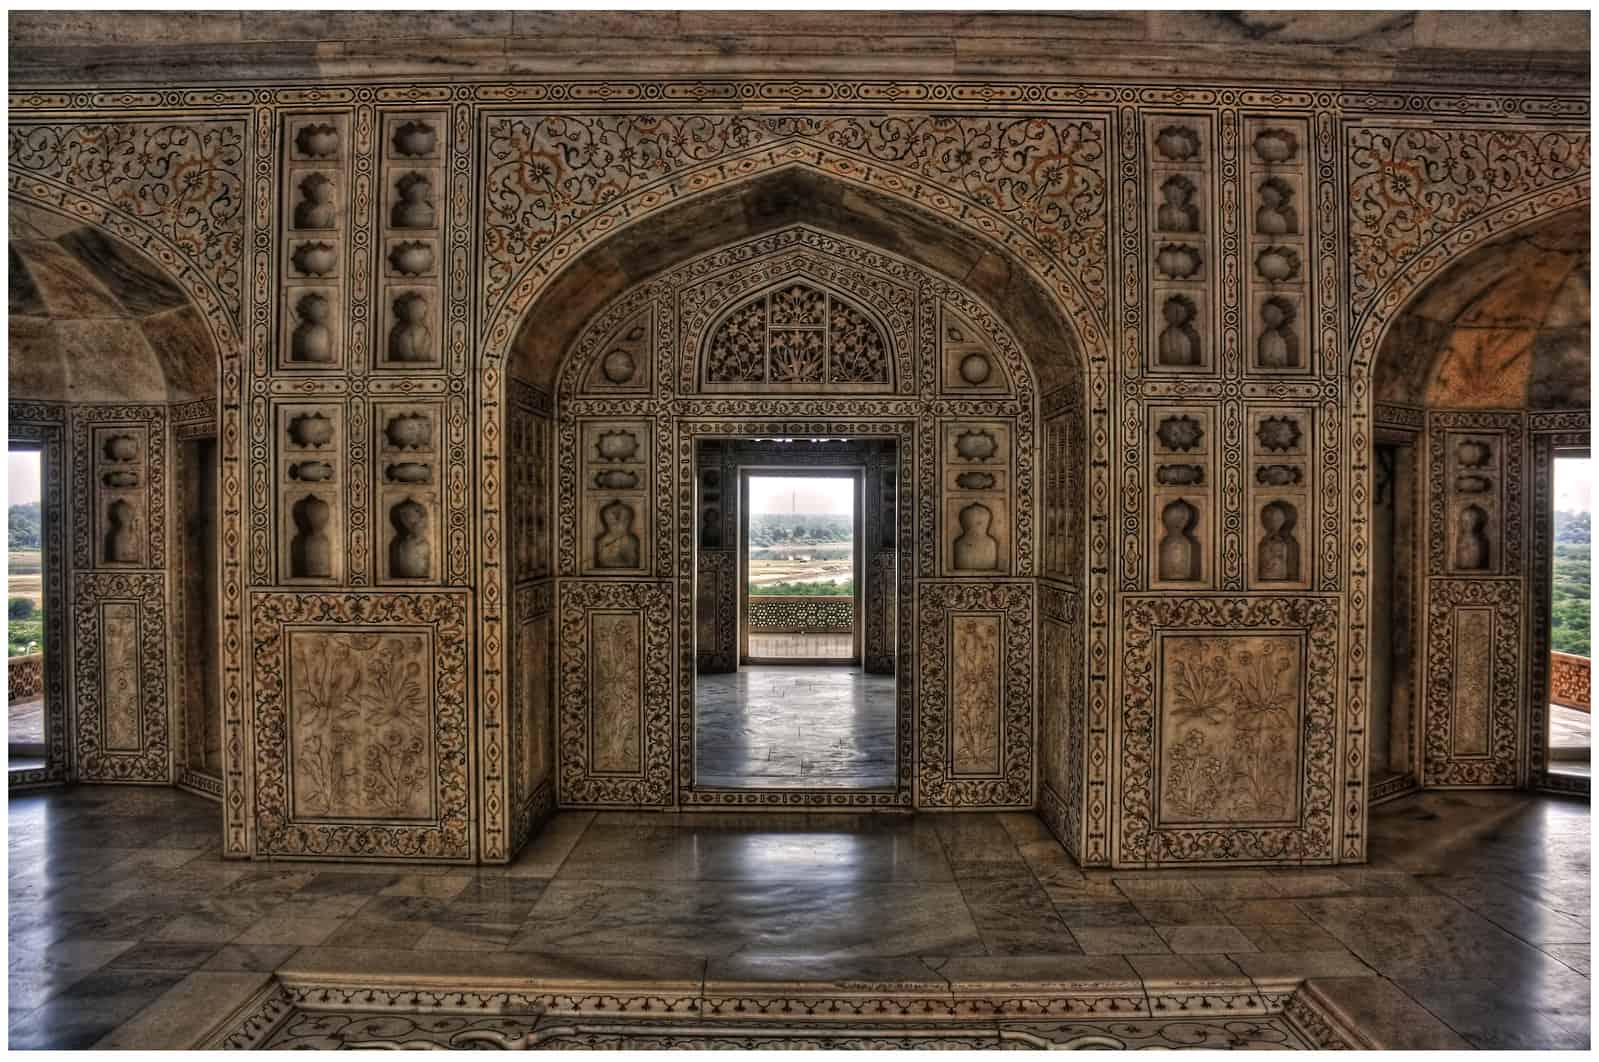 Interior of the Taj Mahal